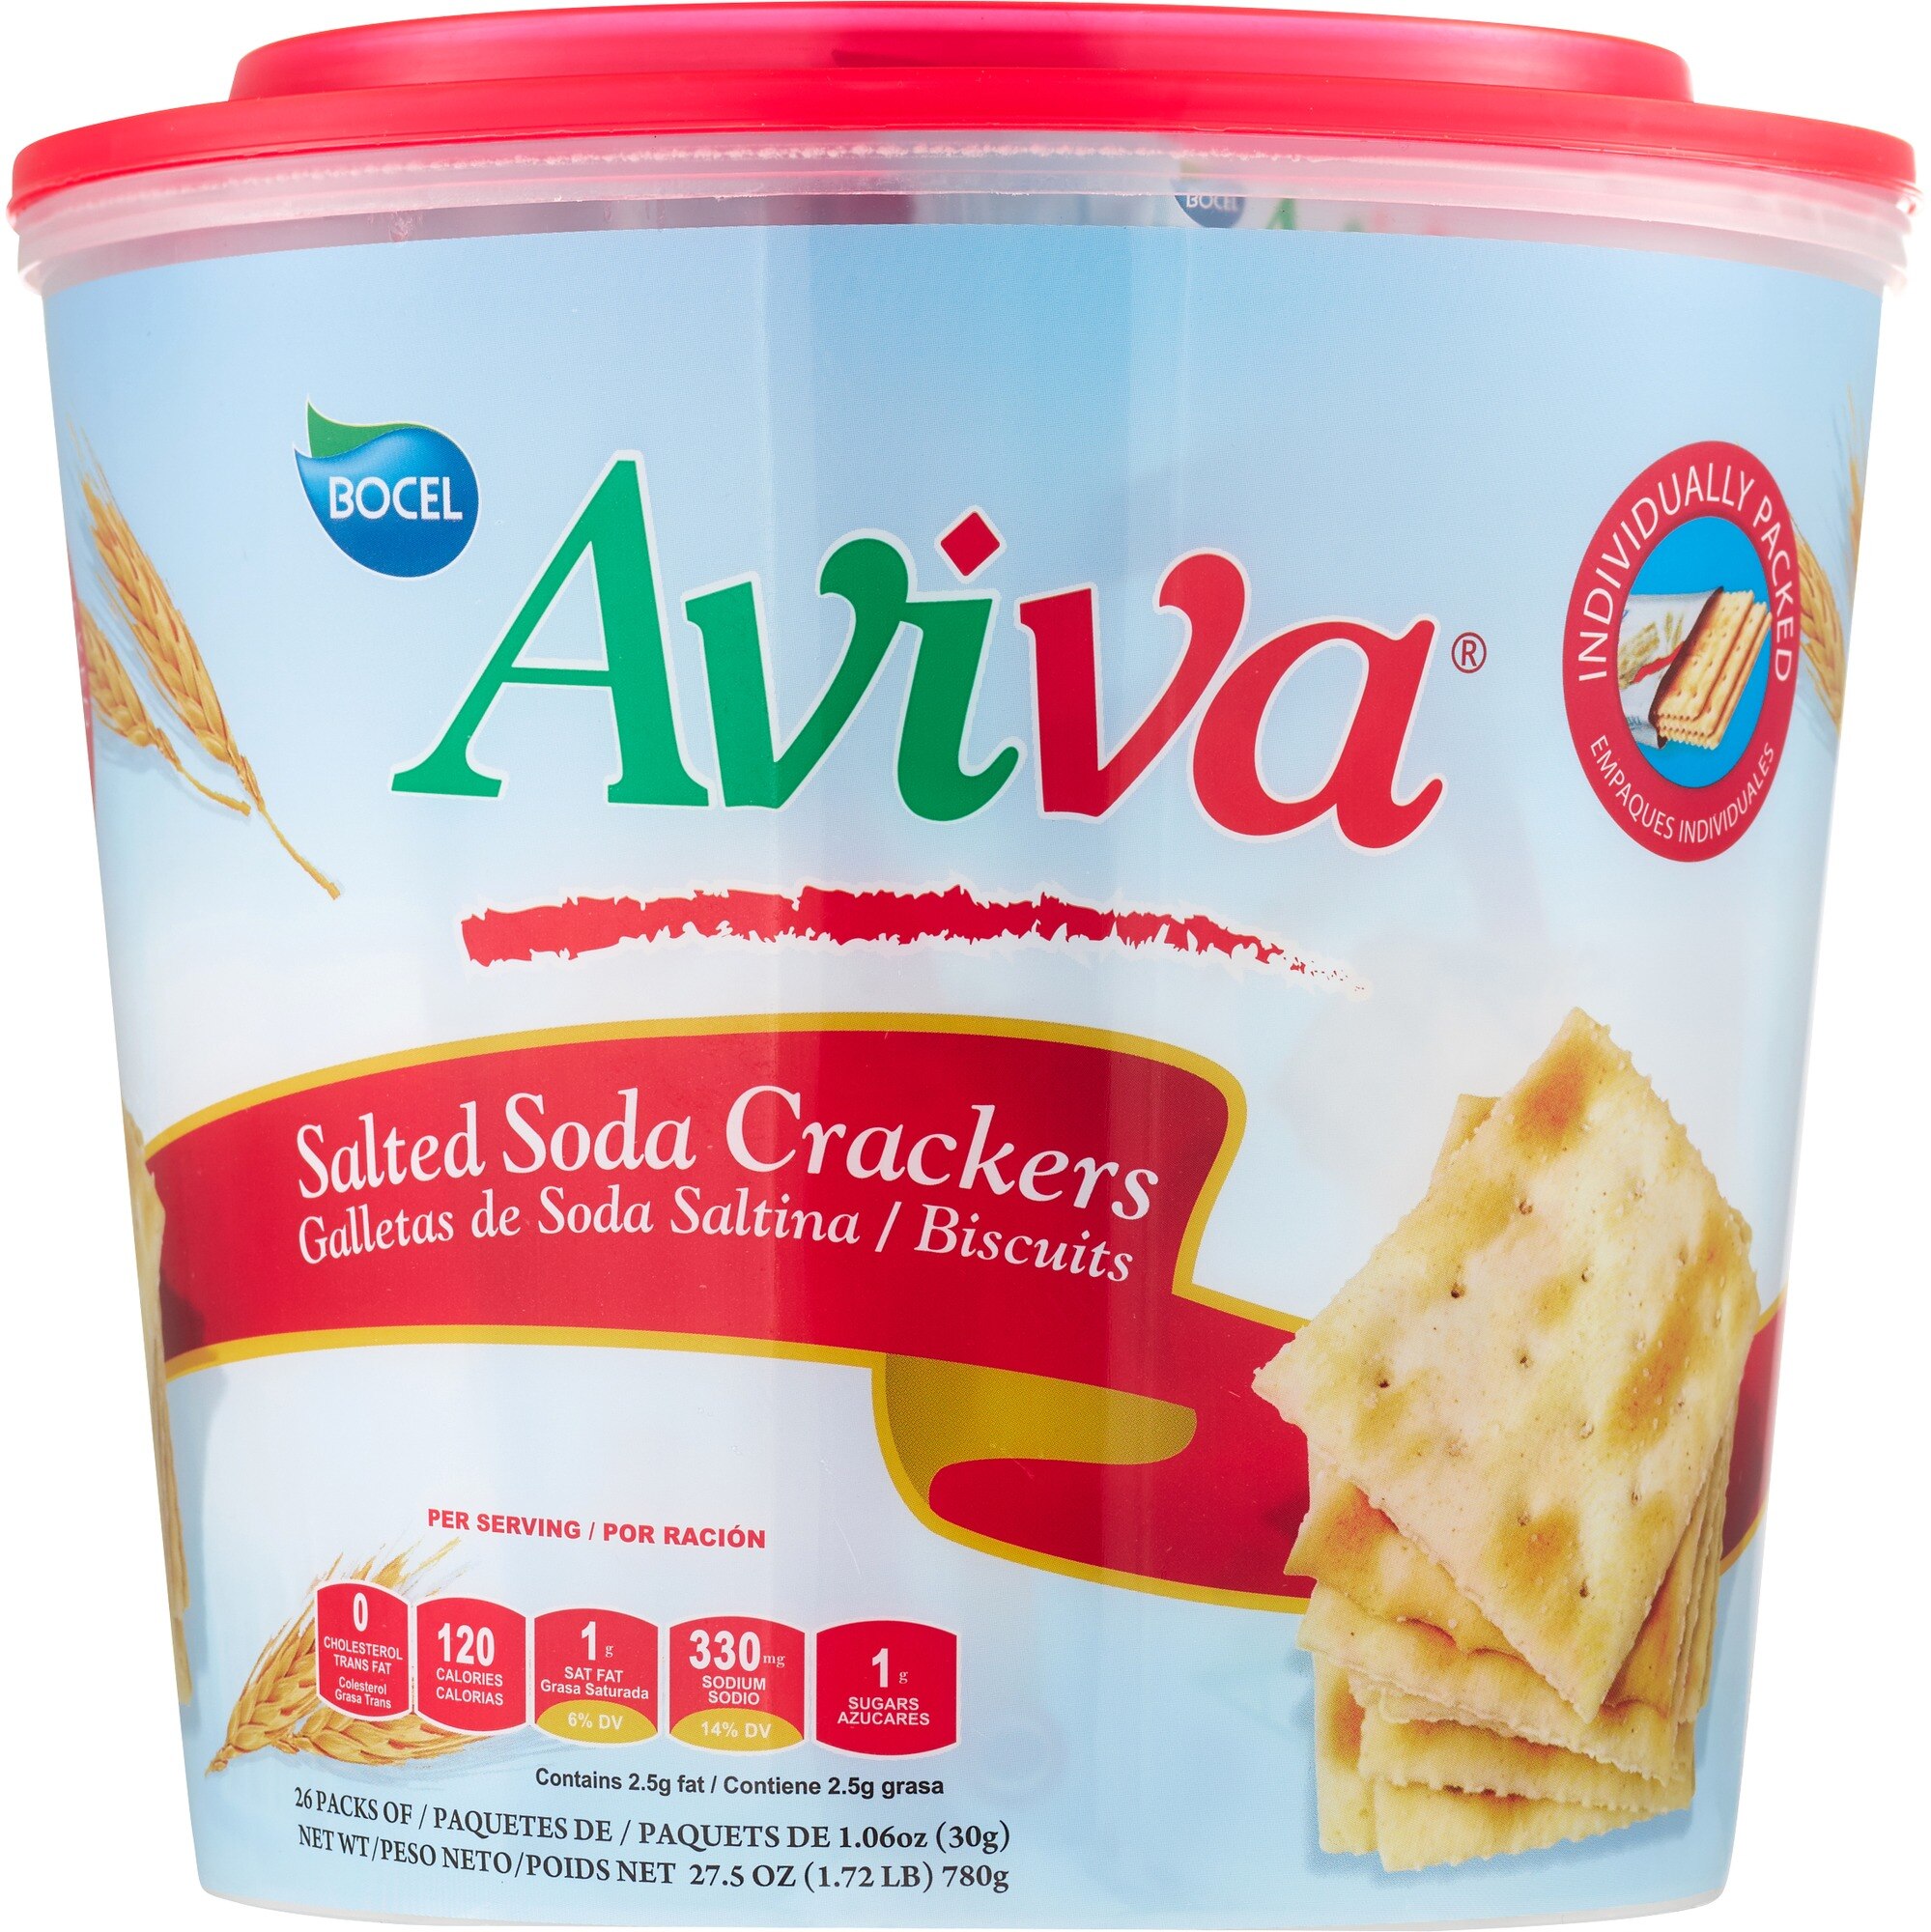 Aviva Soda Crackers, Saltine, 24 OZ